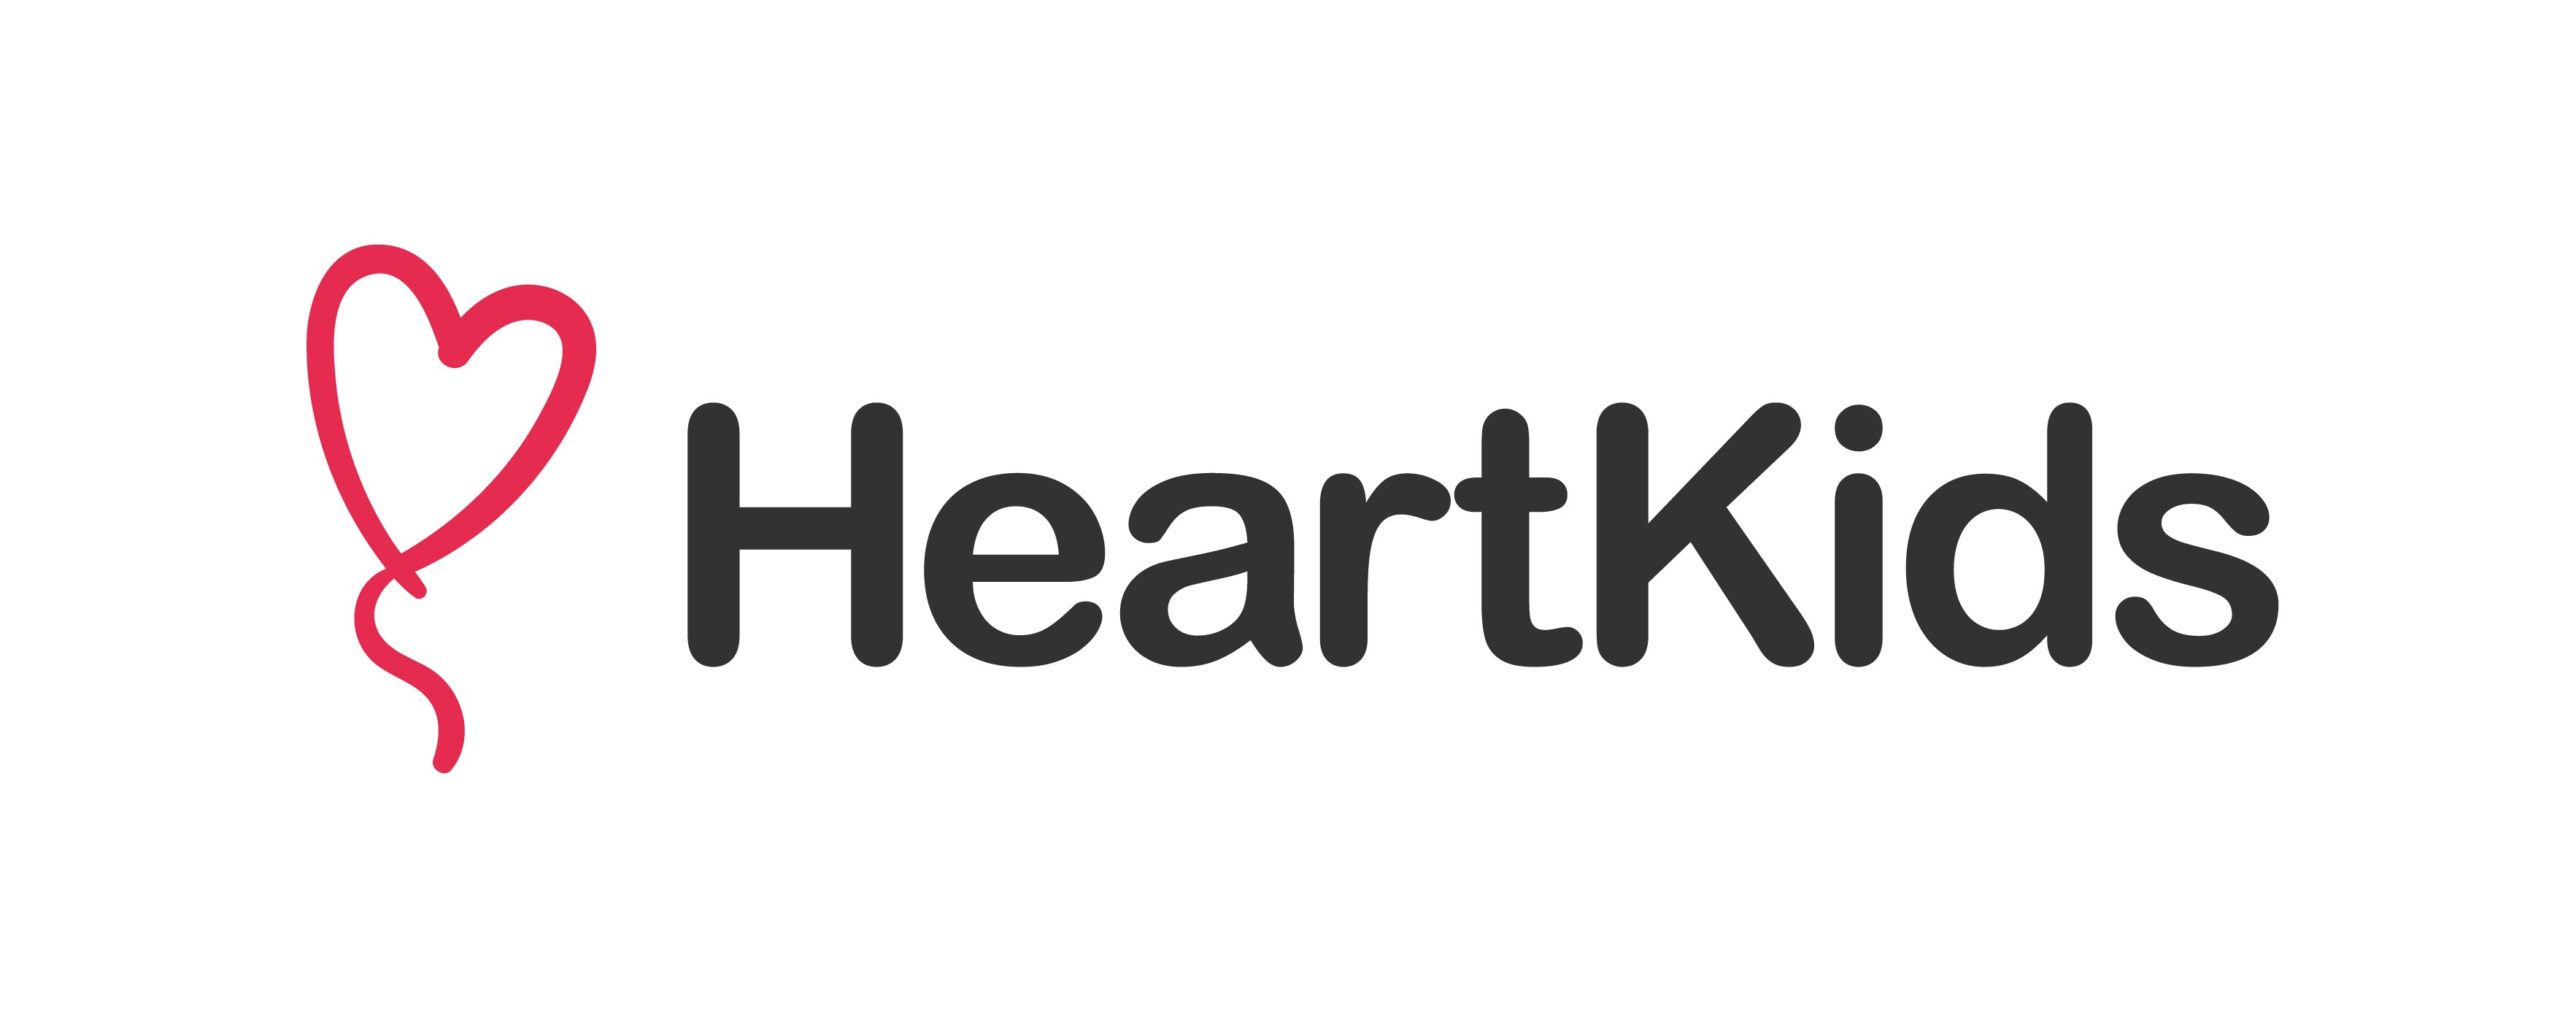 Heart Kids horizantal high res